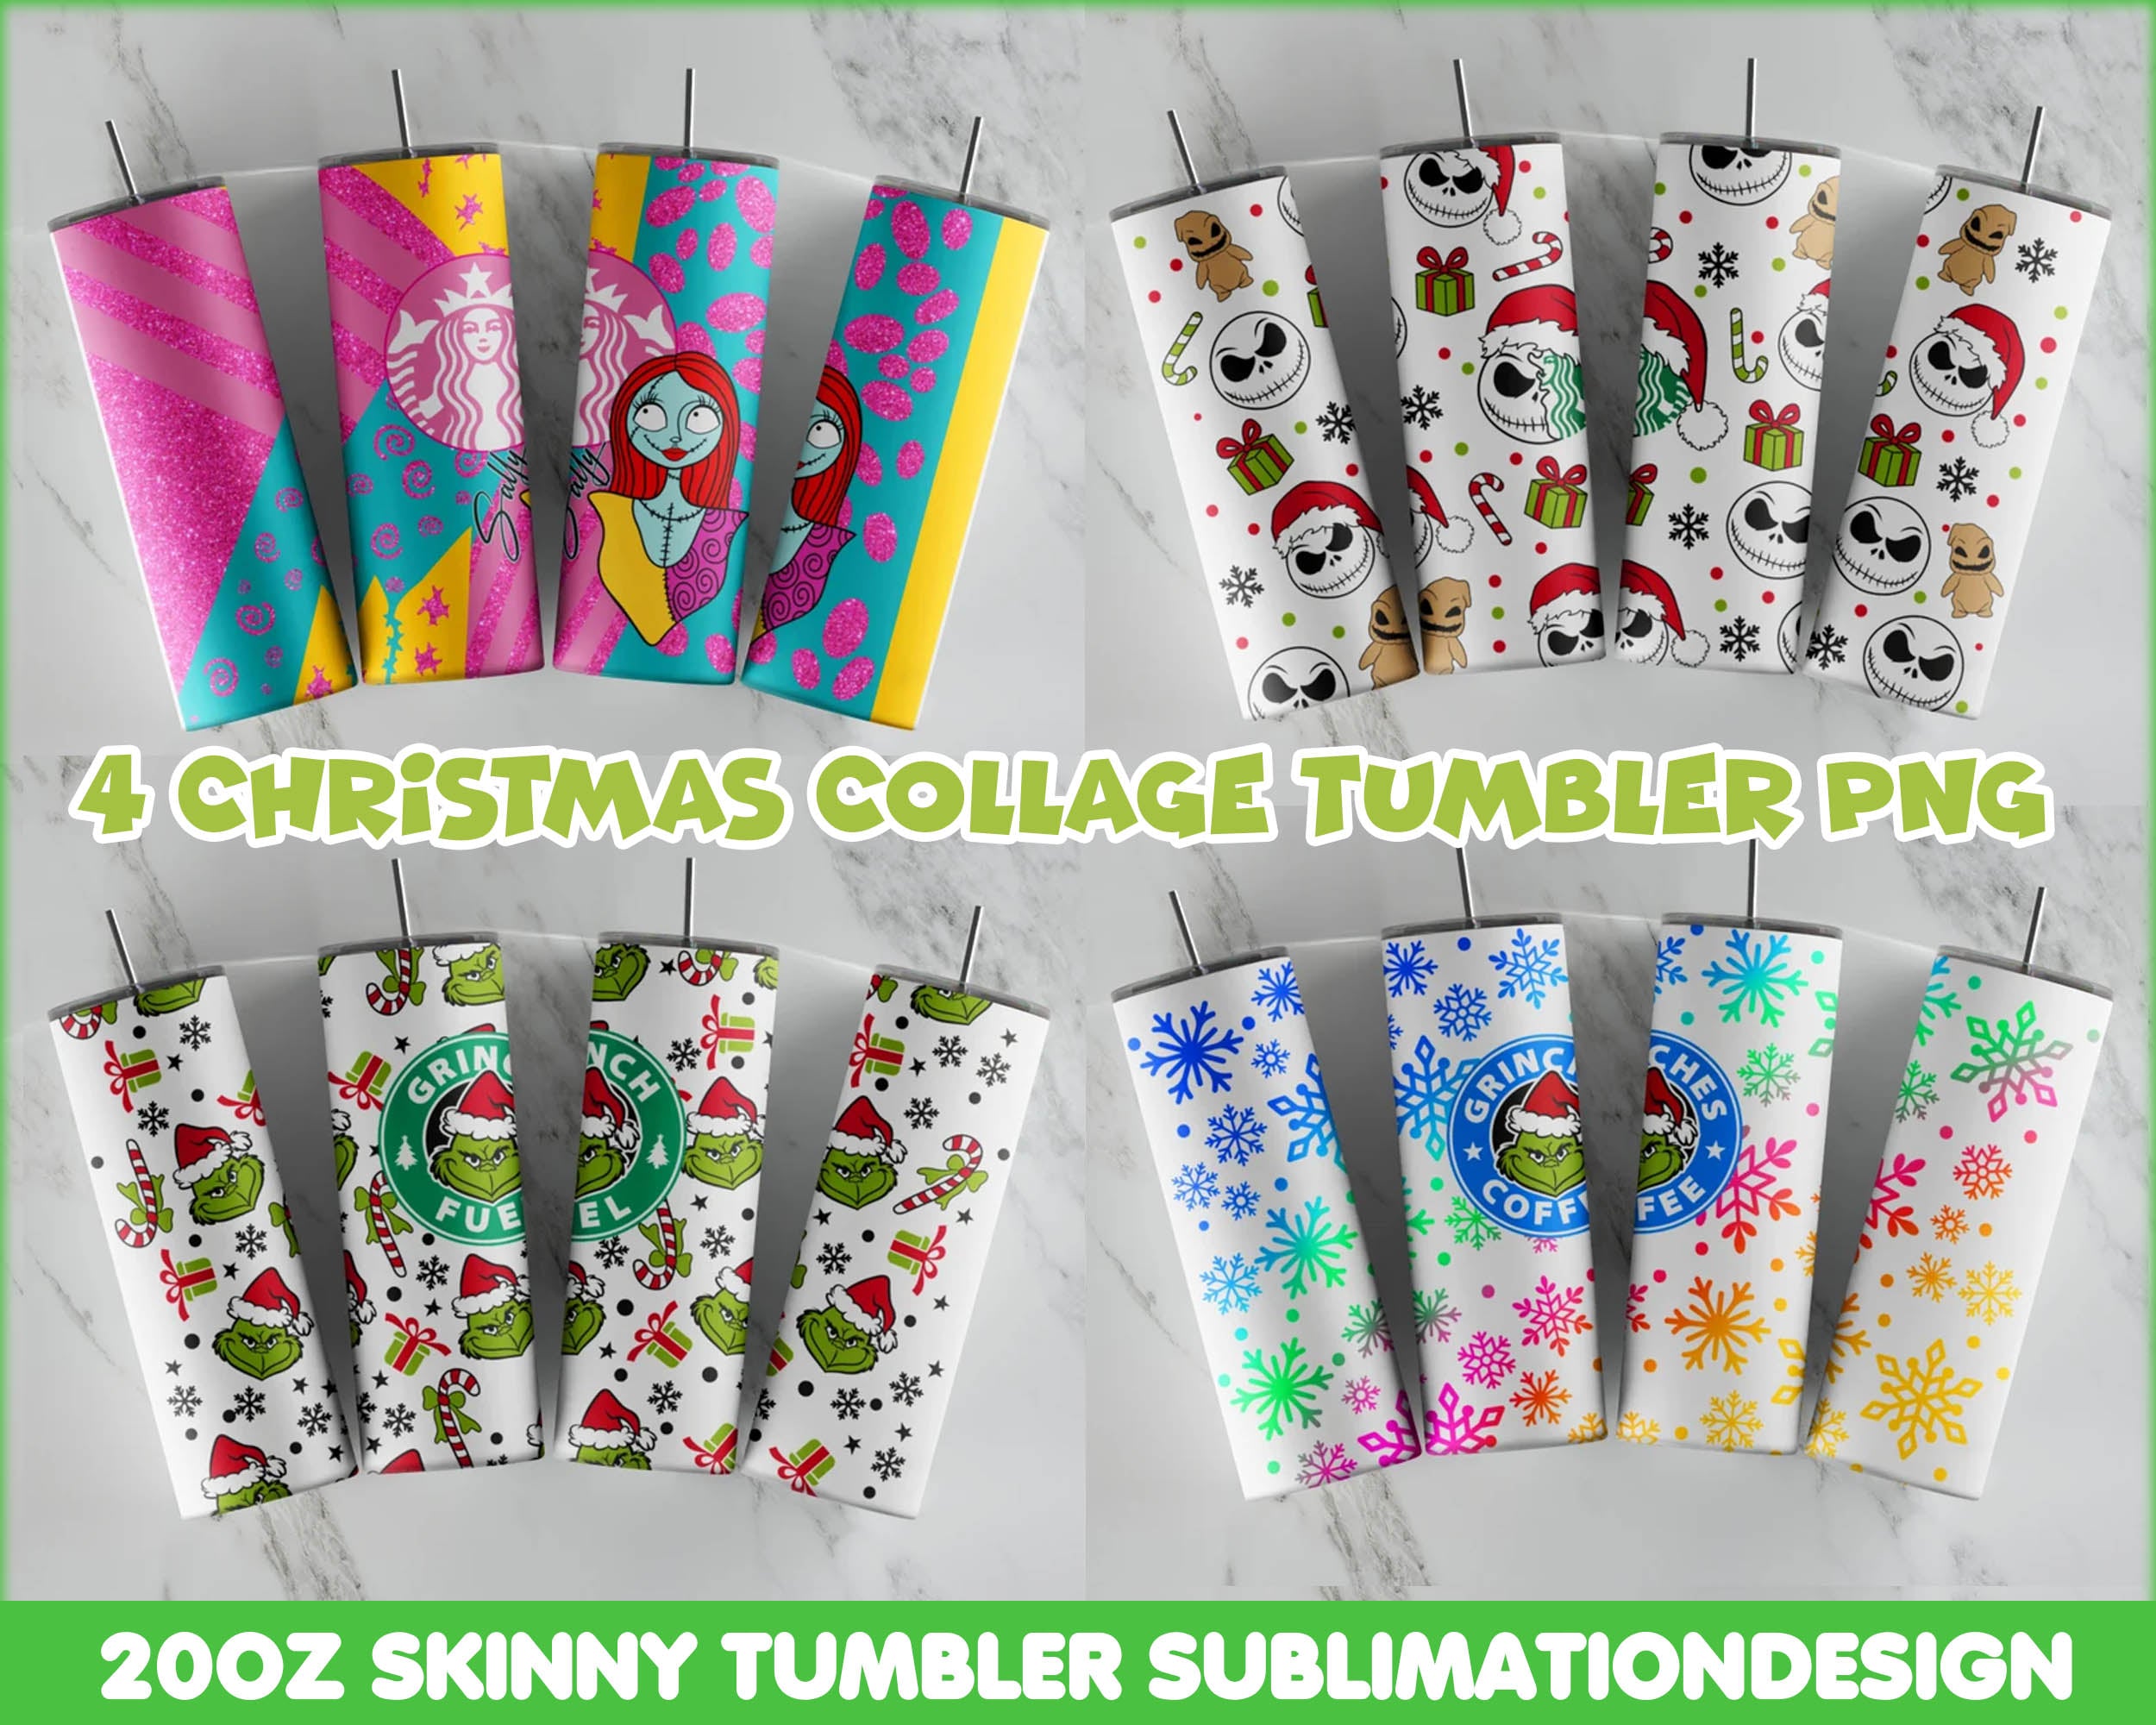 4 Christmas Collage Tumbler, 20oz Skinny Tumbler Sublimation Designs, Christmas Tumbler bundle, PNG, Instant Download  CRM12112203